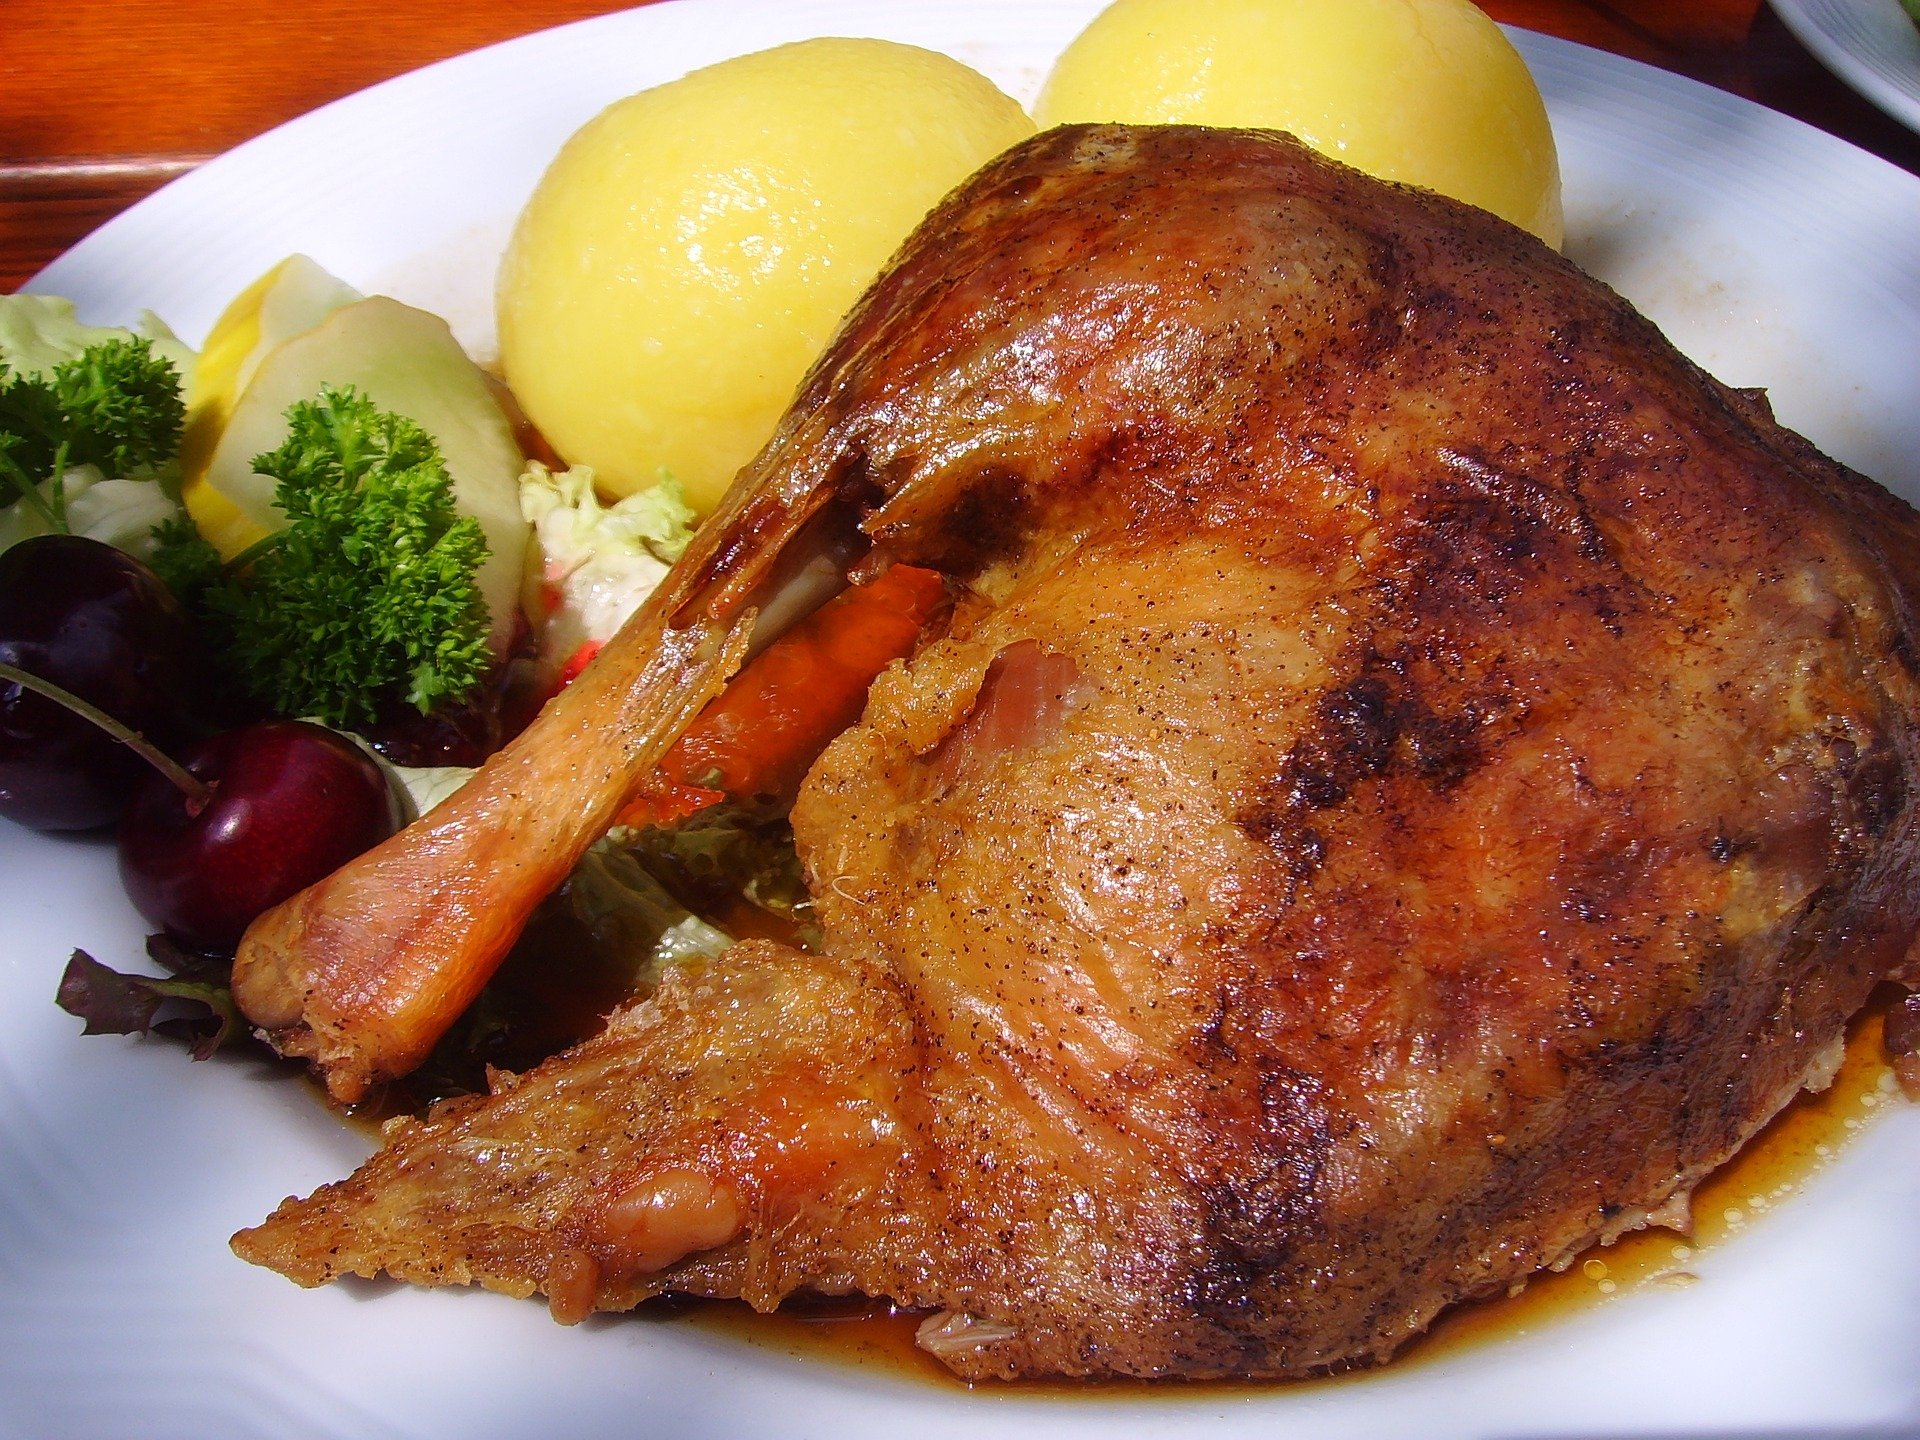 An image of roast goose